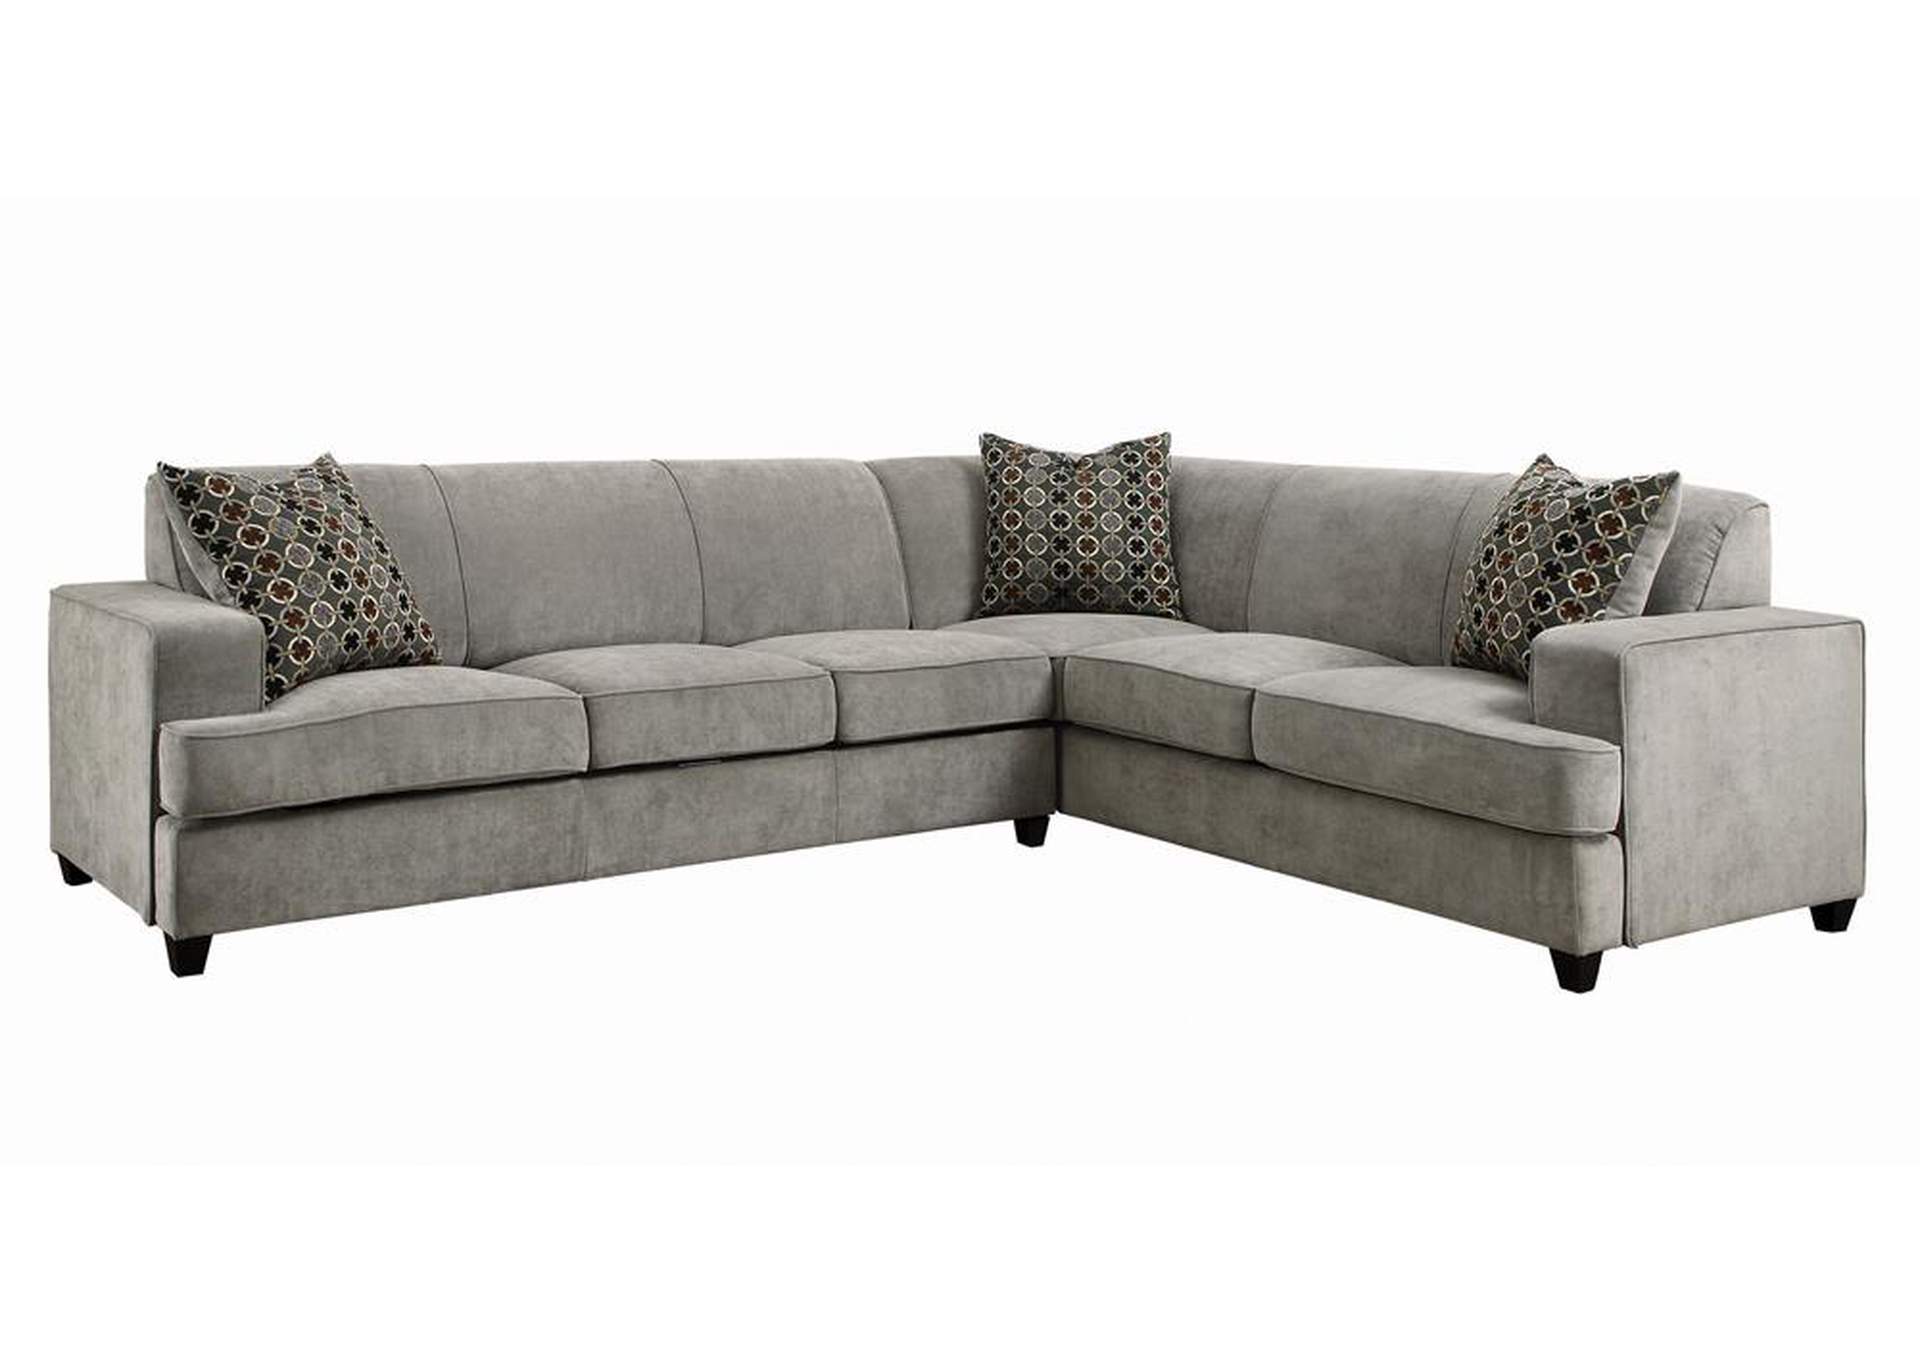 Tess Grey L-Shape Sleeper Sectional,Coaster Furniture